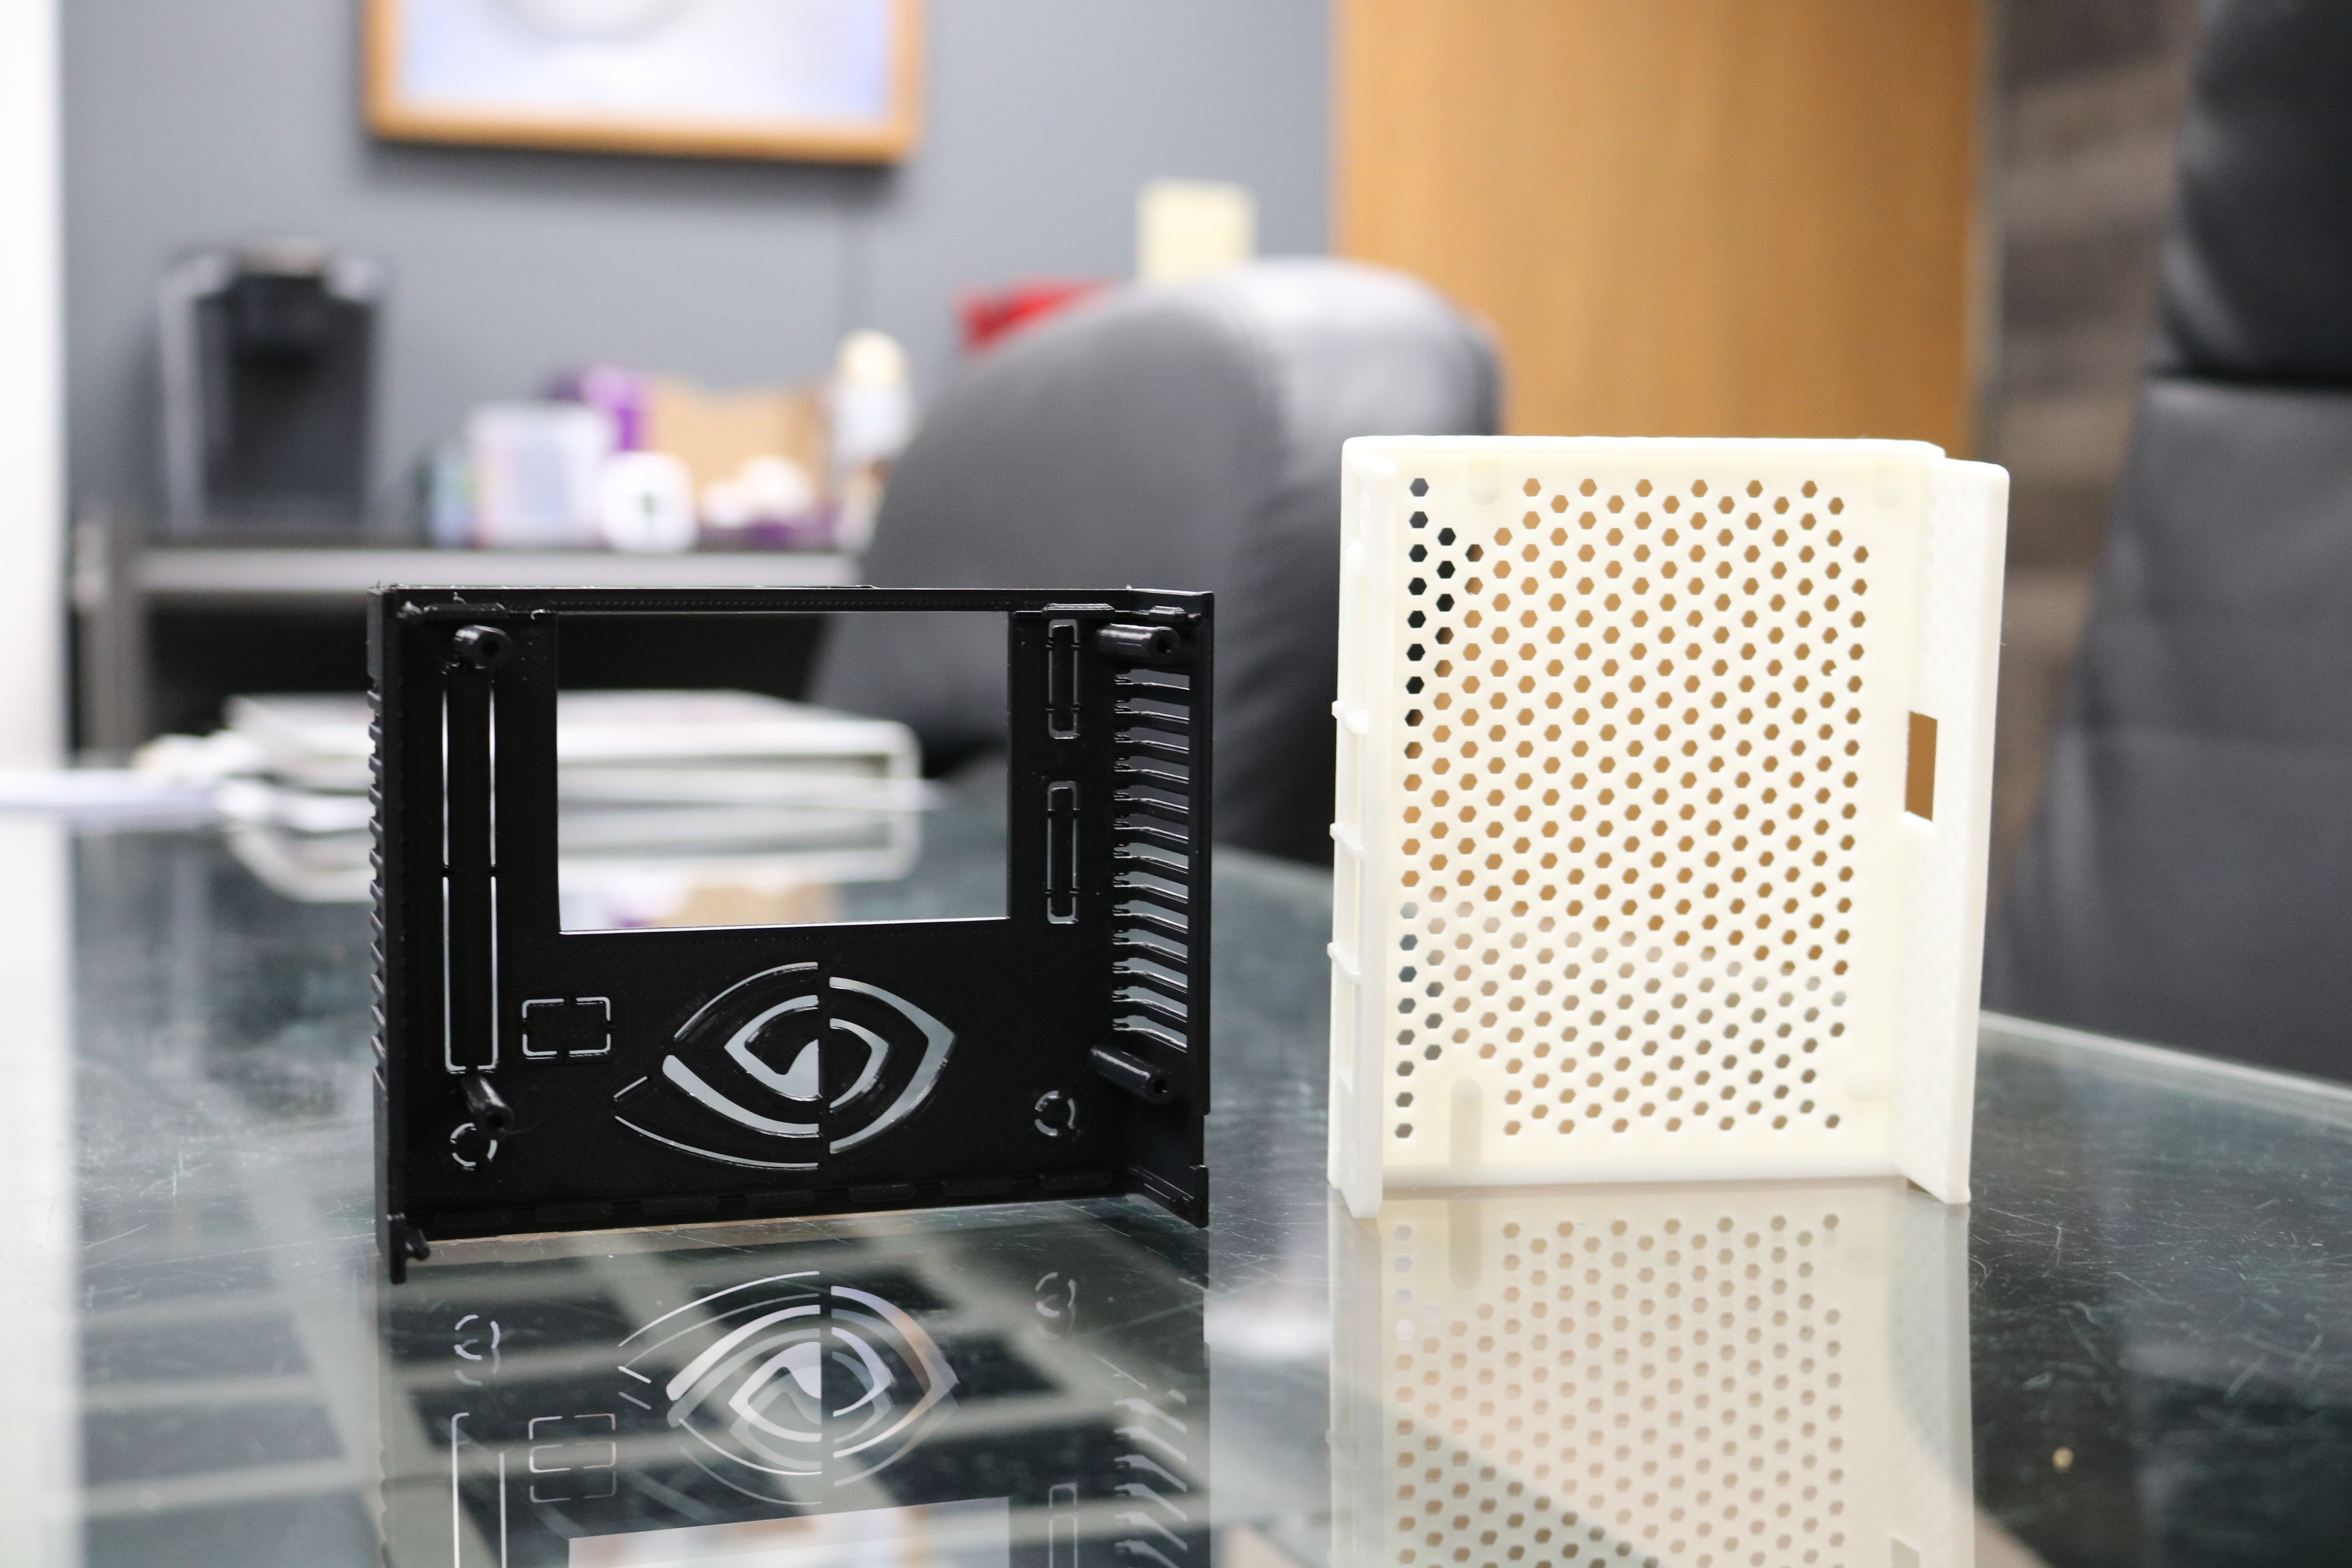 3D Printed Cases for Nvidia Jetson Nano